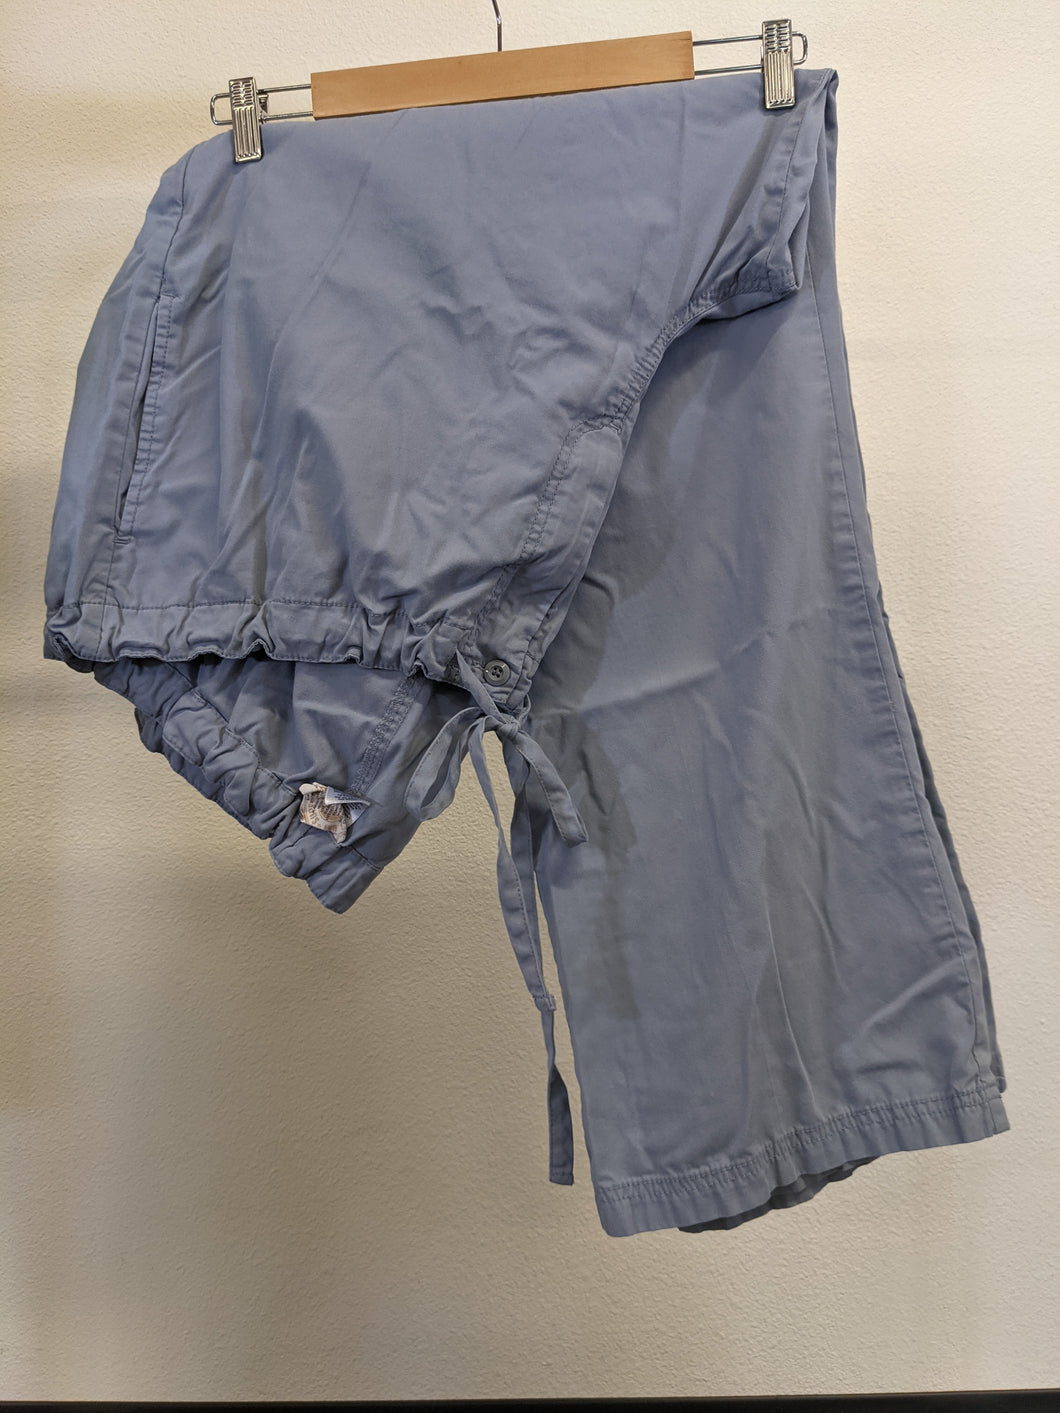 KOI James Men's Scrub Pants with Zip Fly and Drawstring Waist